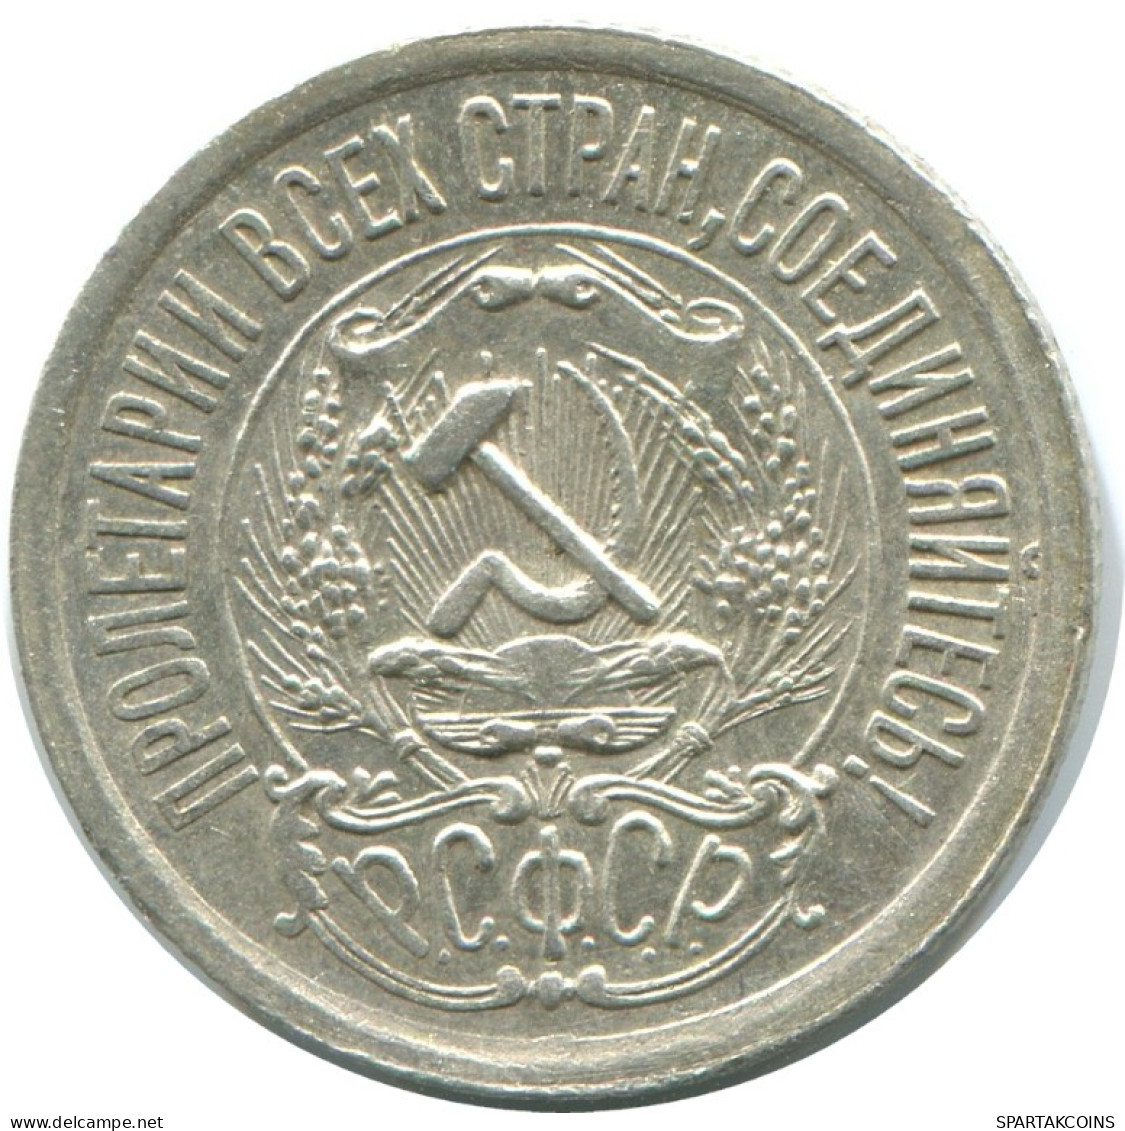 15 KOPEKS 1923 RUSSLAND RUSSIA RSFSR SILBER Münze HIGH GRADE #AF112.4.D.A - Russland